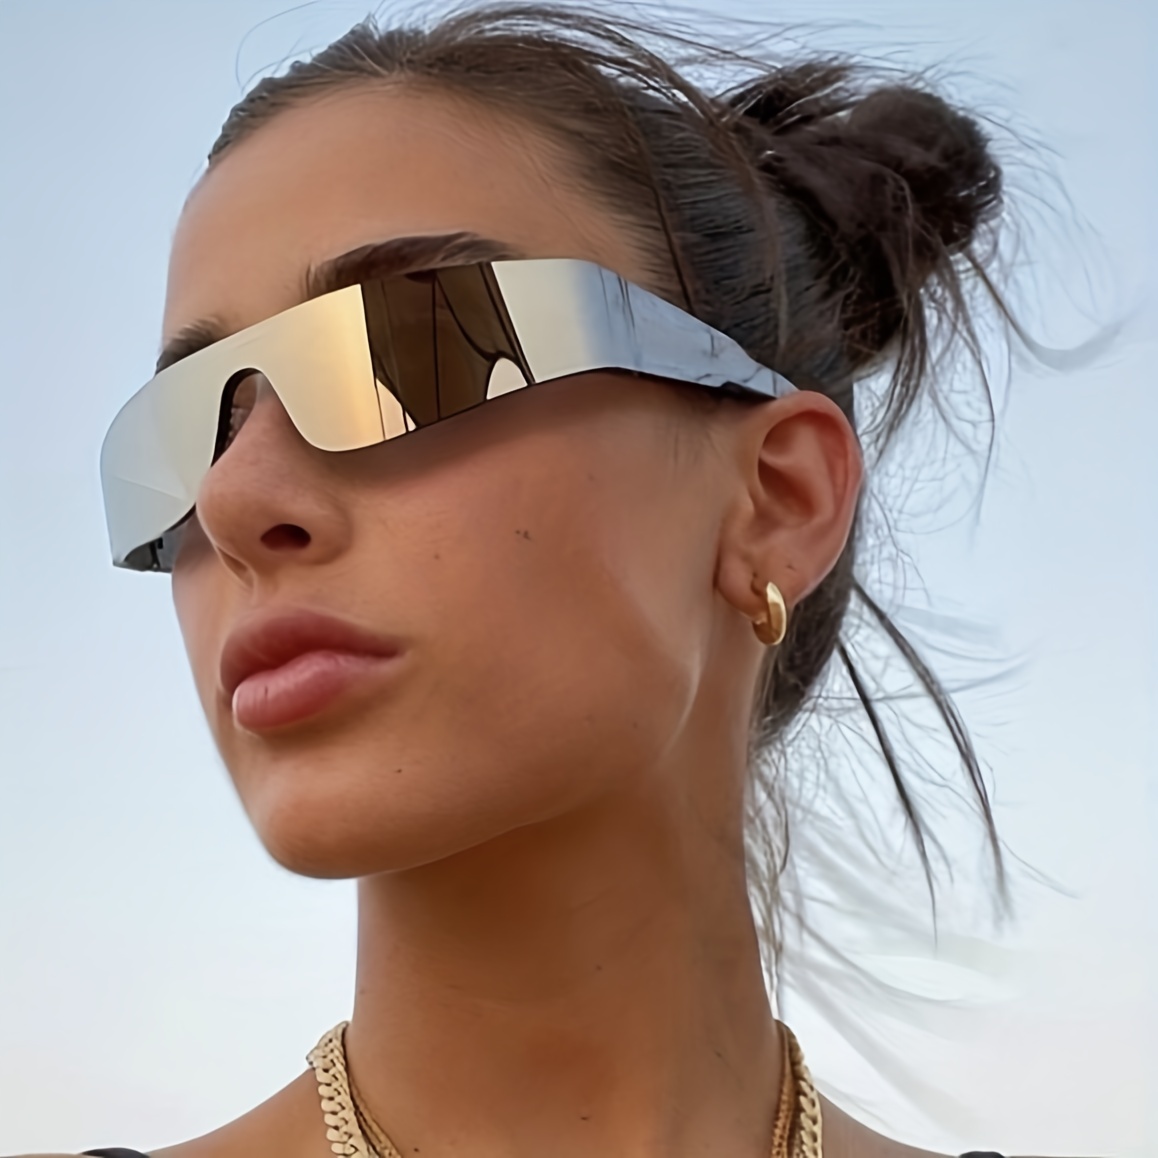 Retro Rectangle Sunglasses Men Women Oversized Square Thick Metal